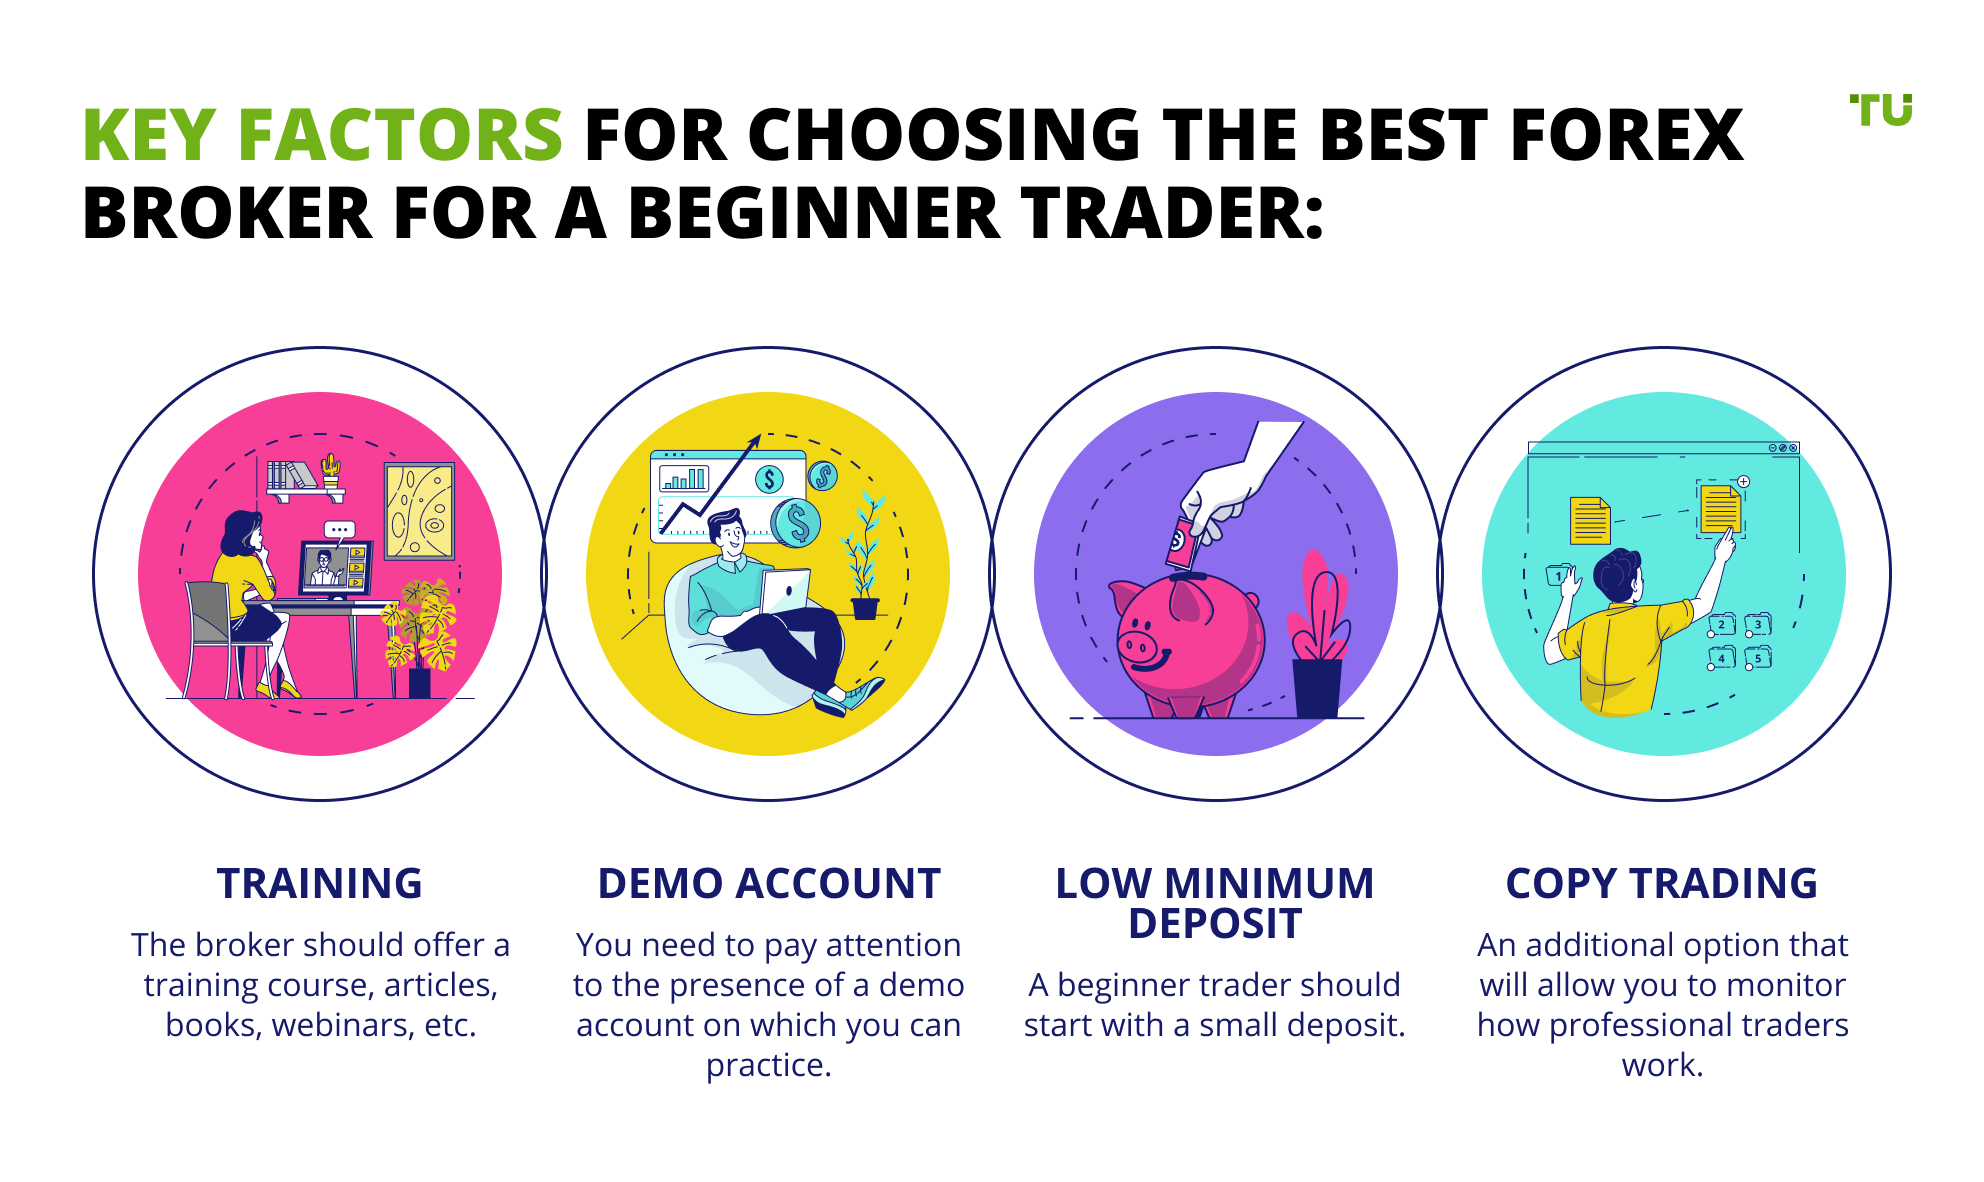 Key factors for choosing the best Forex broker for a beginner trader